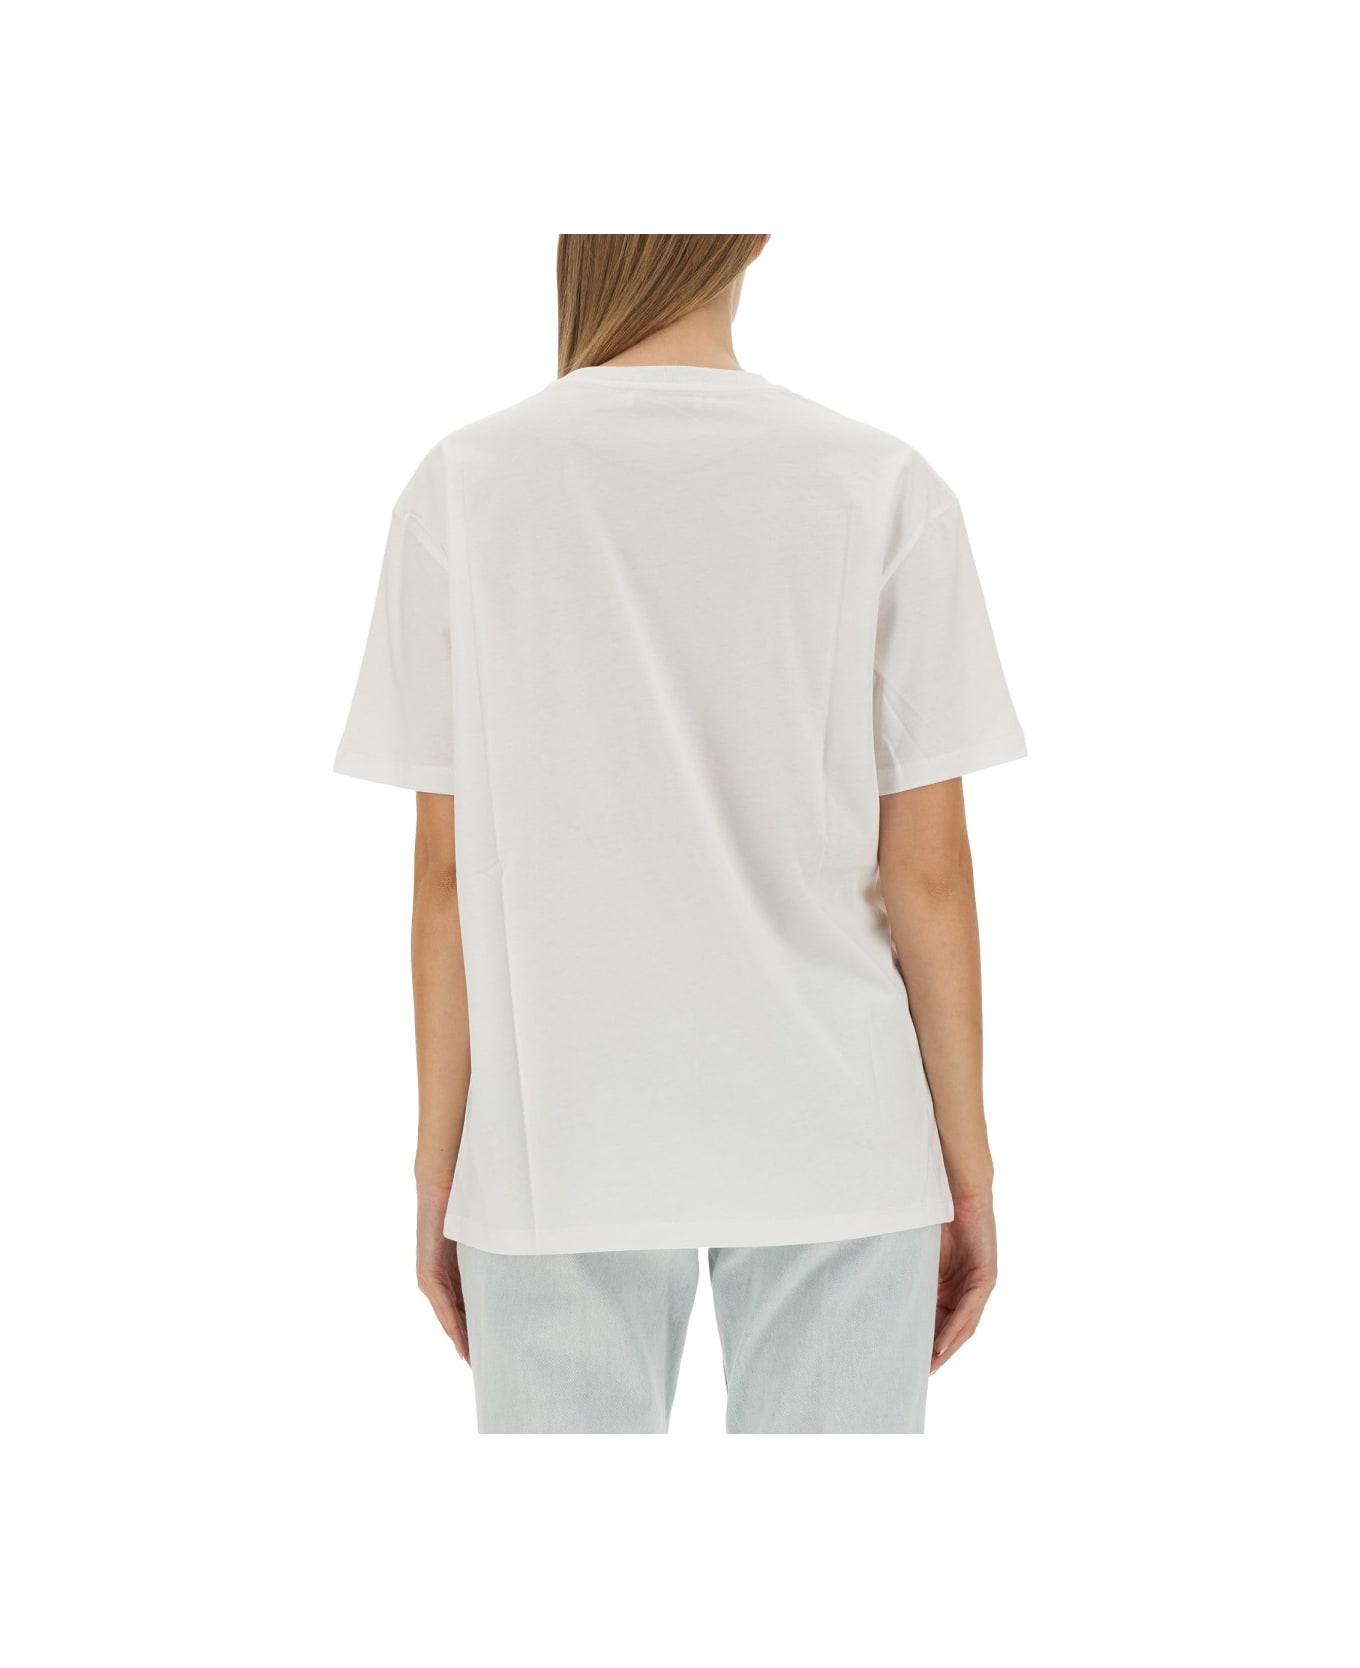 Nina Ricci Innocent Apple T-shirt - WHITE